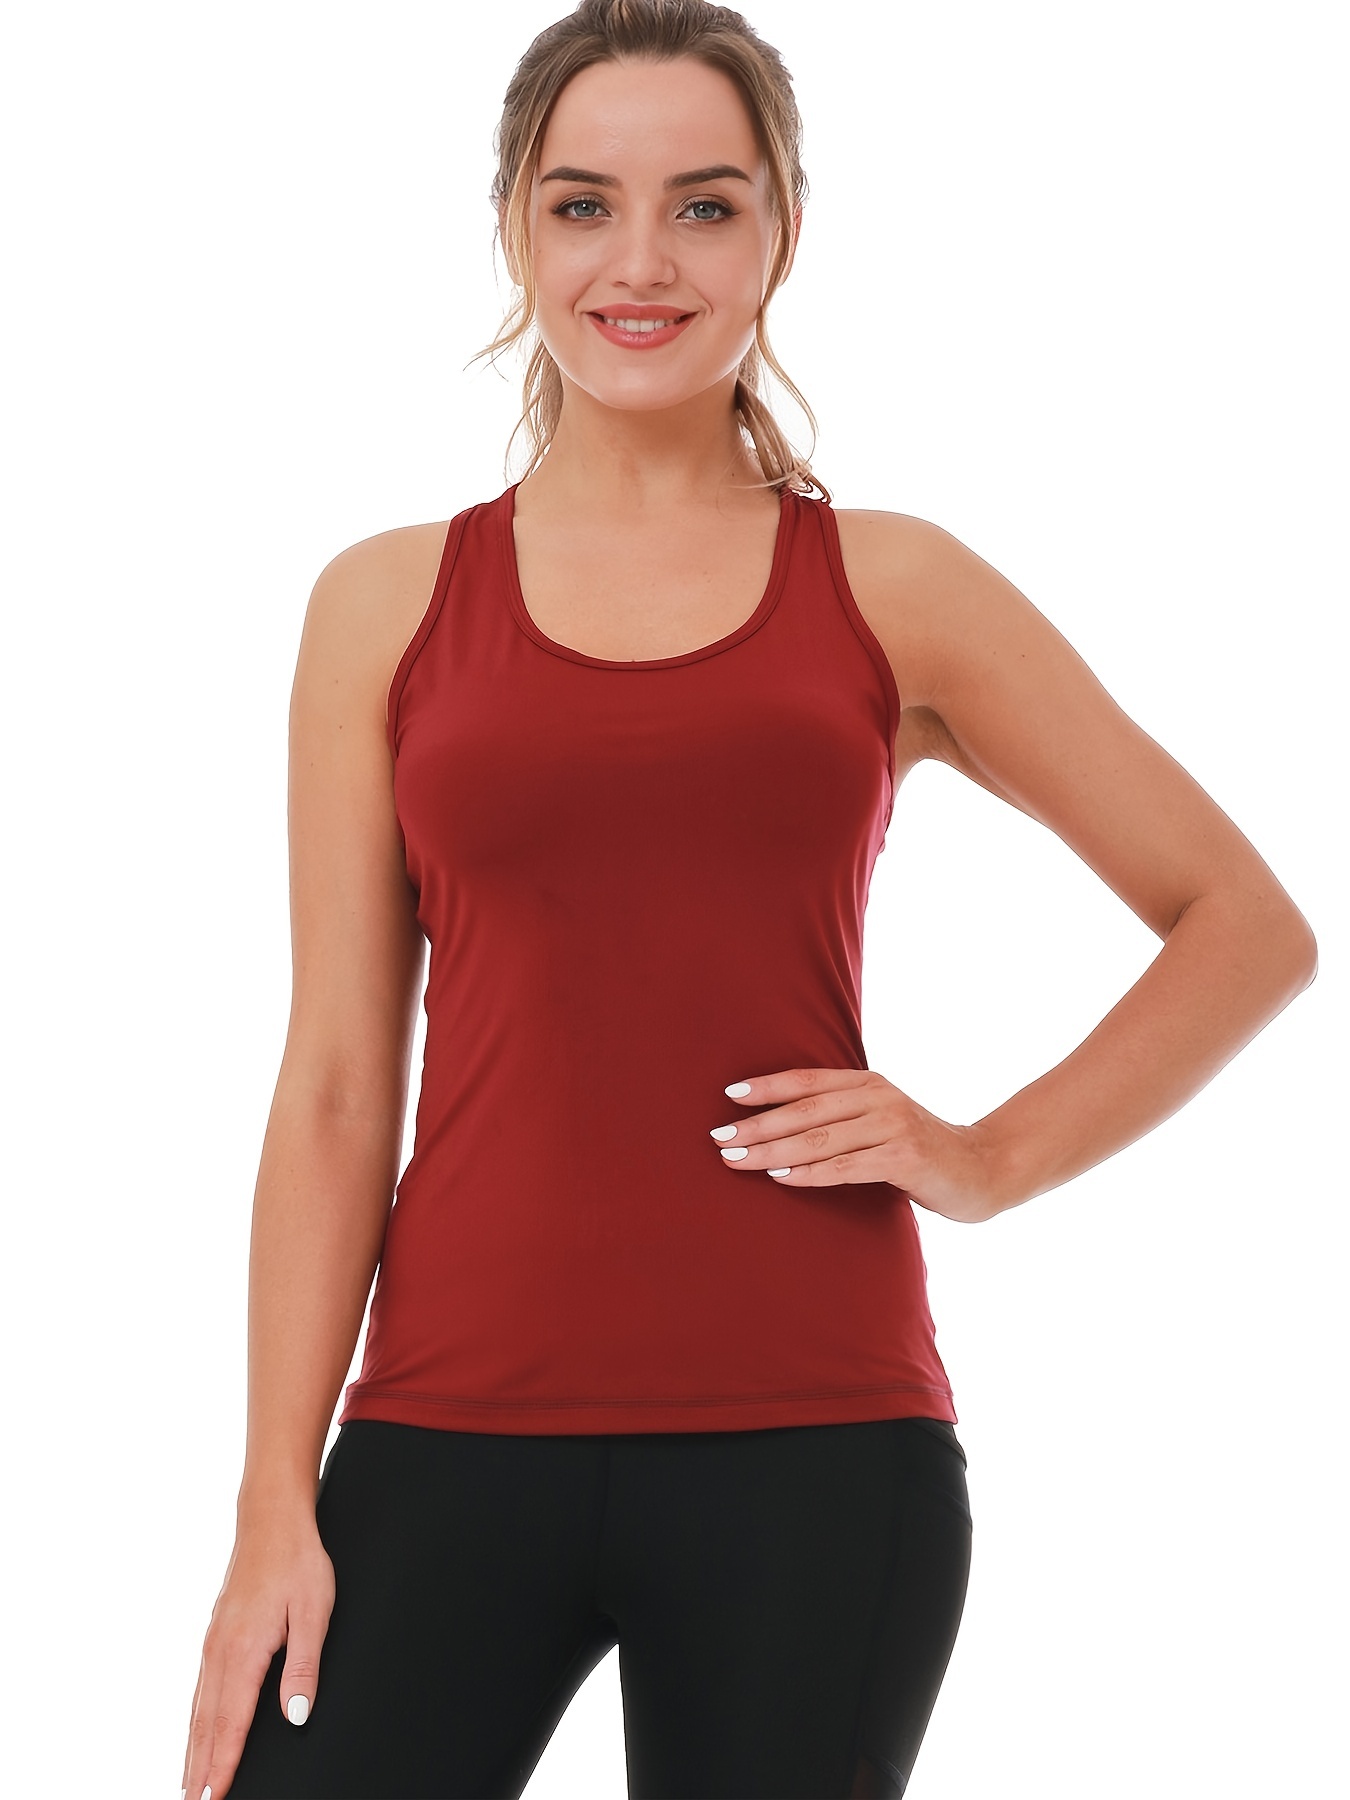 Women Racerback Workout Tank Top Athletic Undershirt Sleeveless